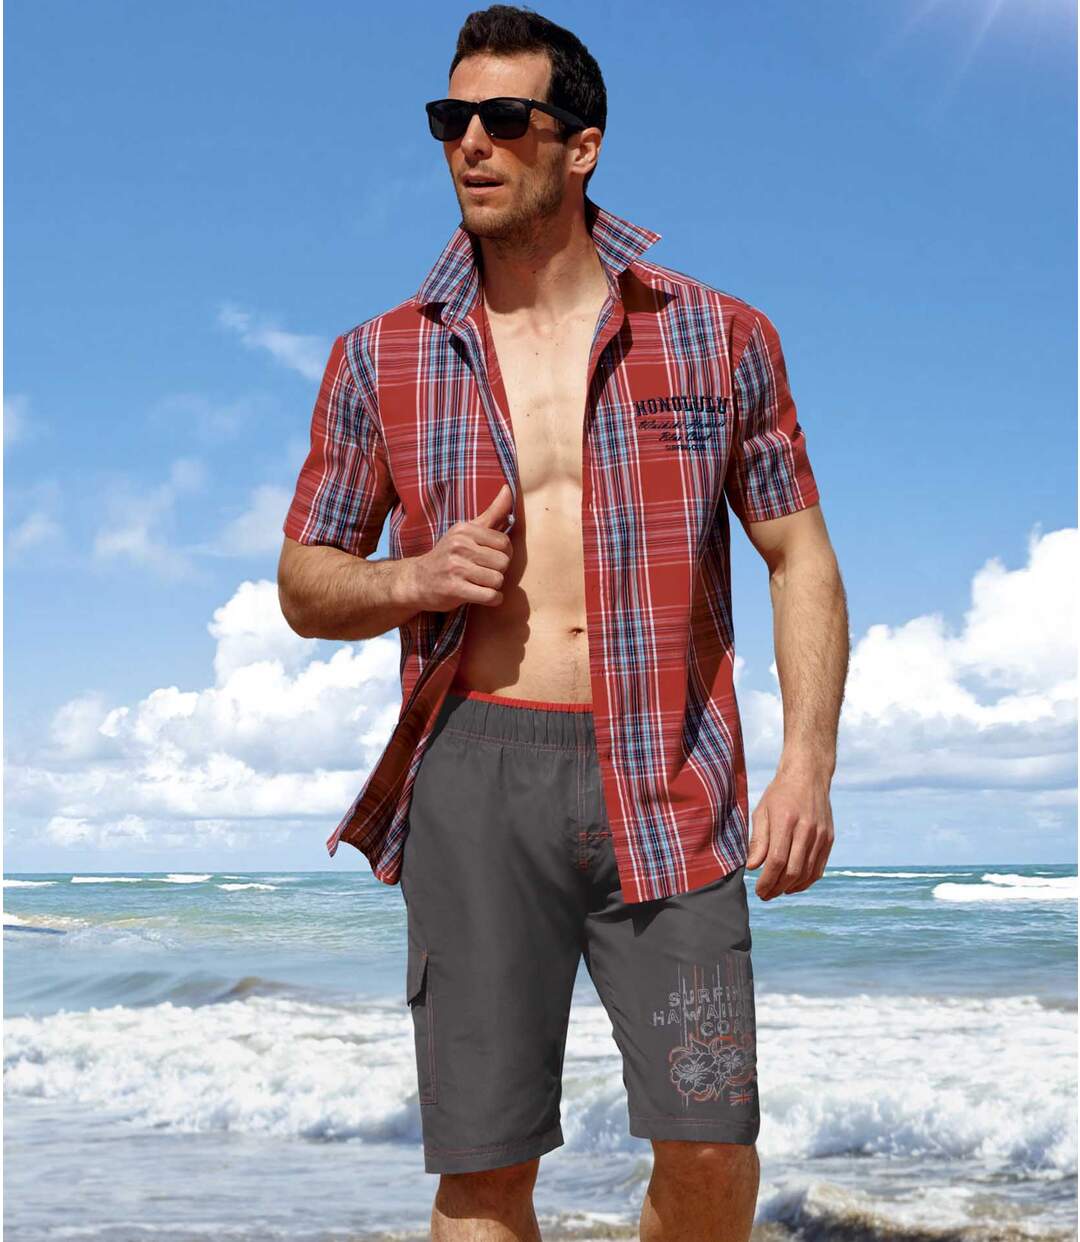 Men's Summer Beach Style | Guys Clothes 